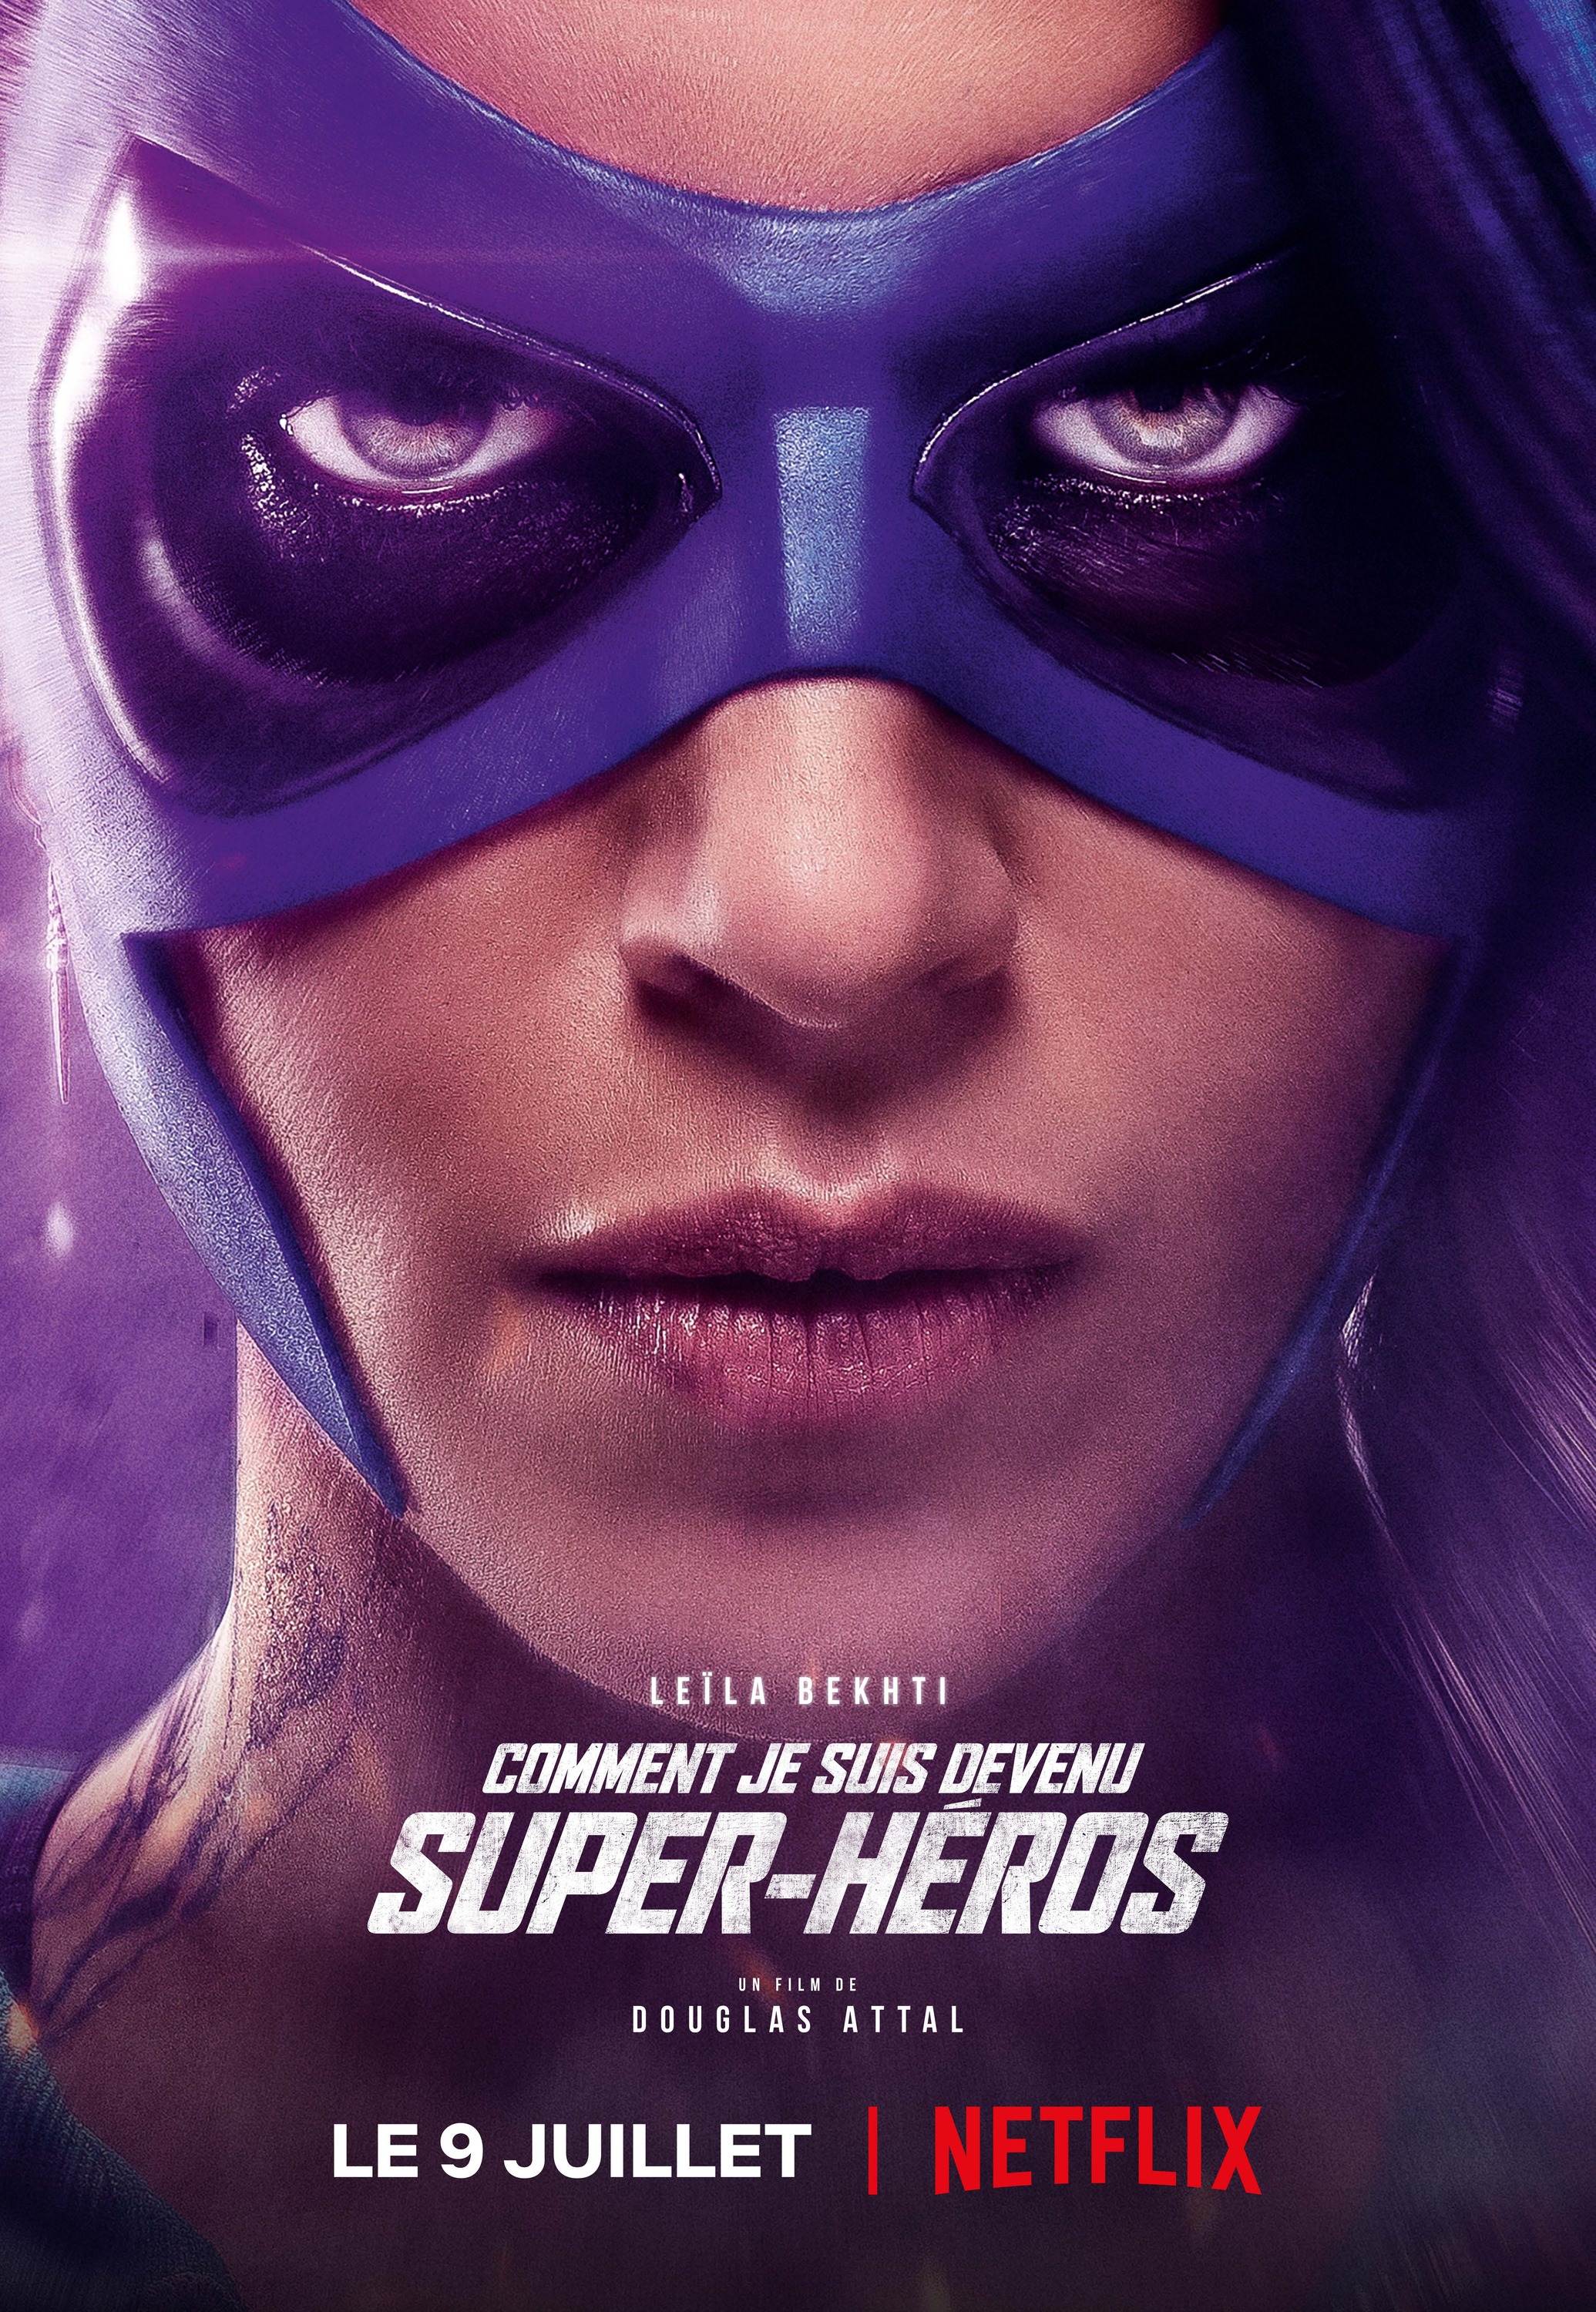 Mega Sized Movie Poster Image for Comment je suis devenu super-héros (#9 of 12)